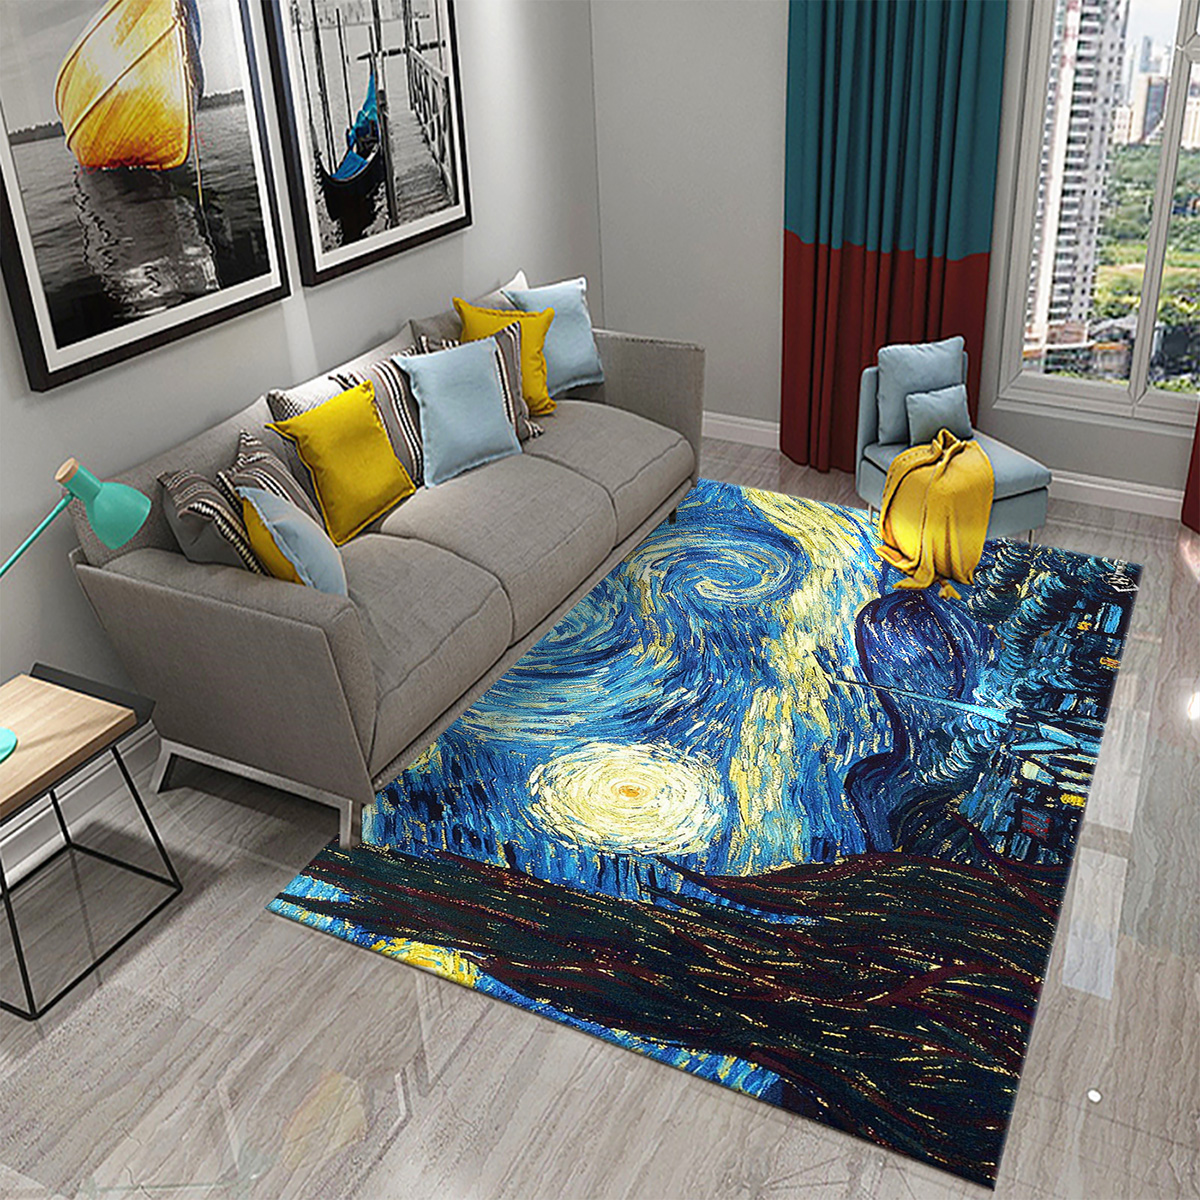 Color Van Gogh Oil Painting Art Carpet for Bedroom Living Room Bathroom Kitchen Entrance Non-slip Comfort Carpet for Home Decor